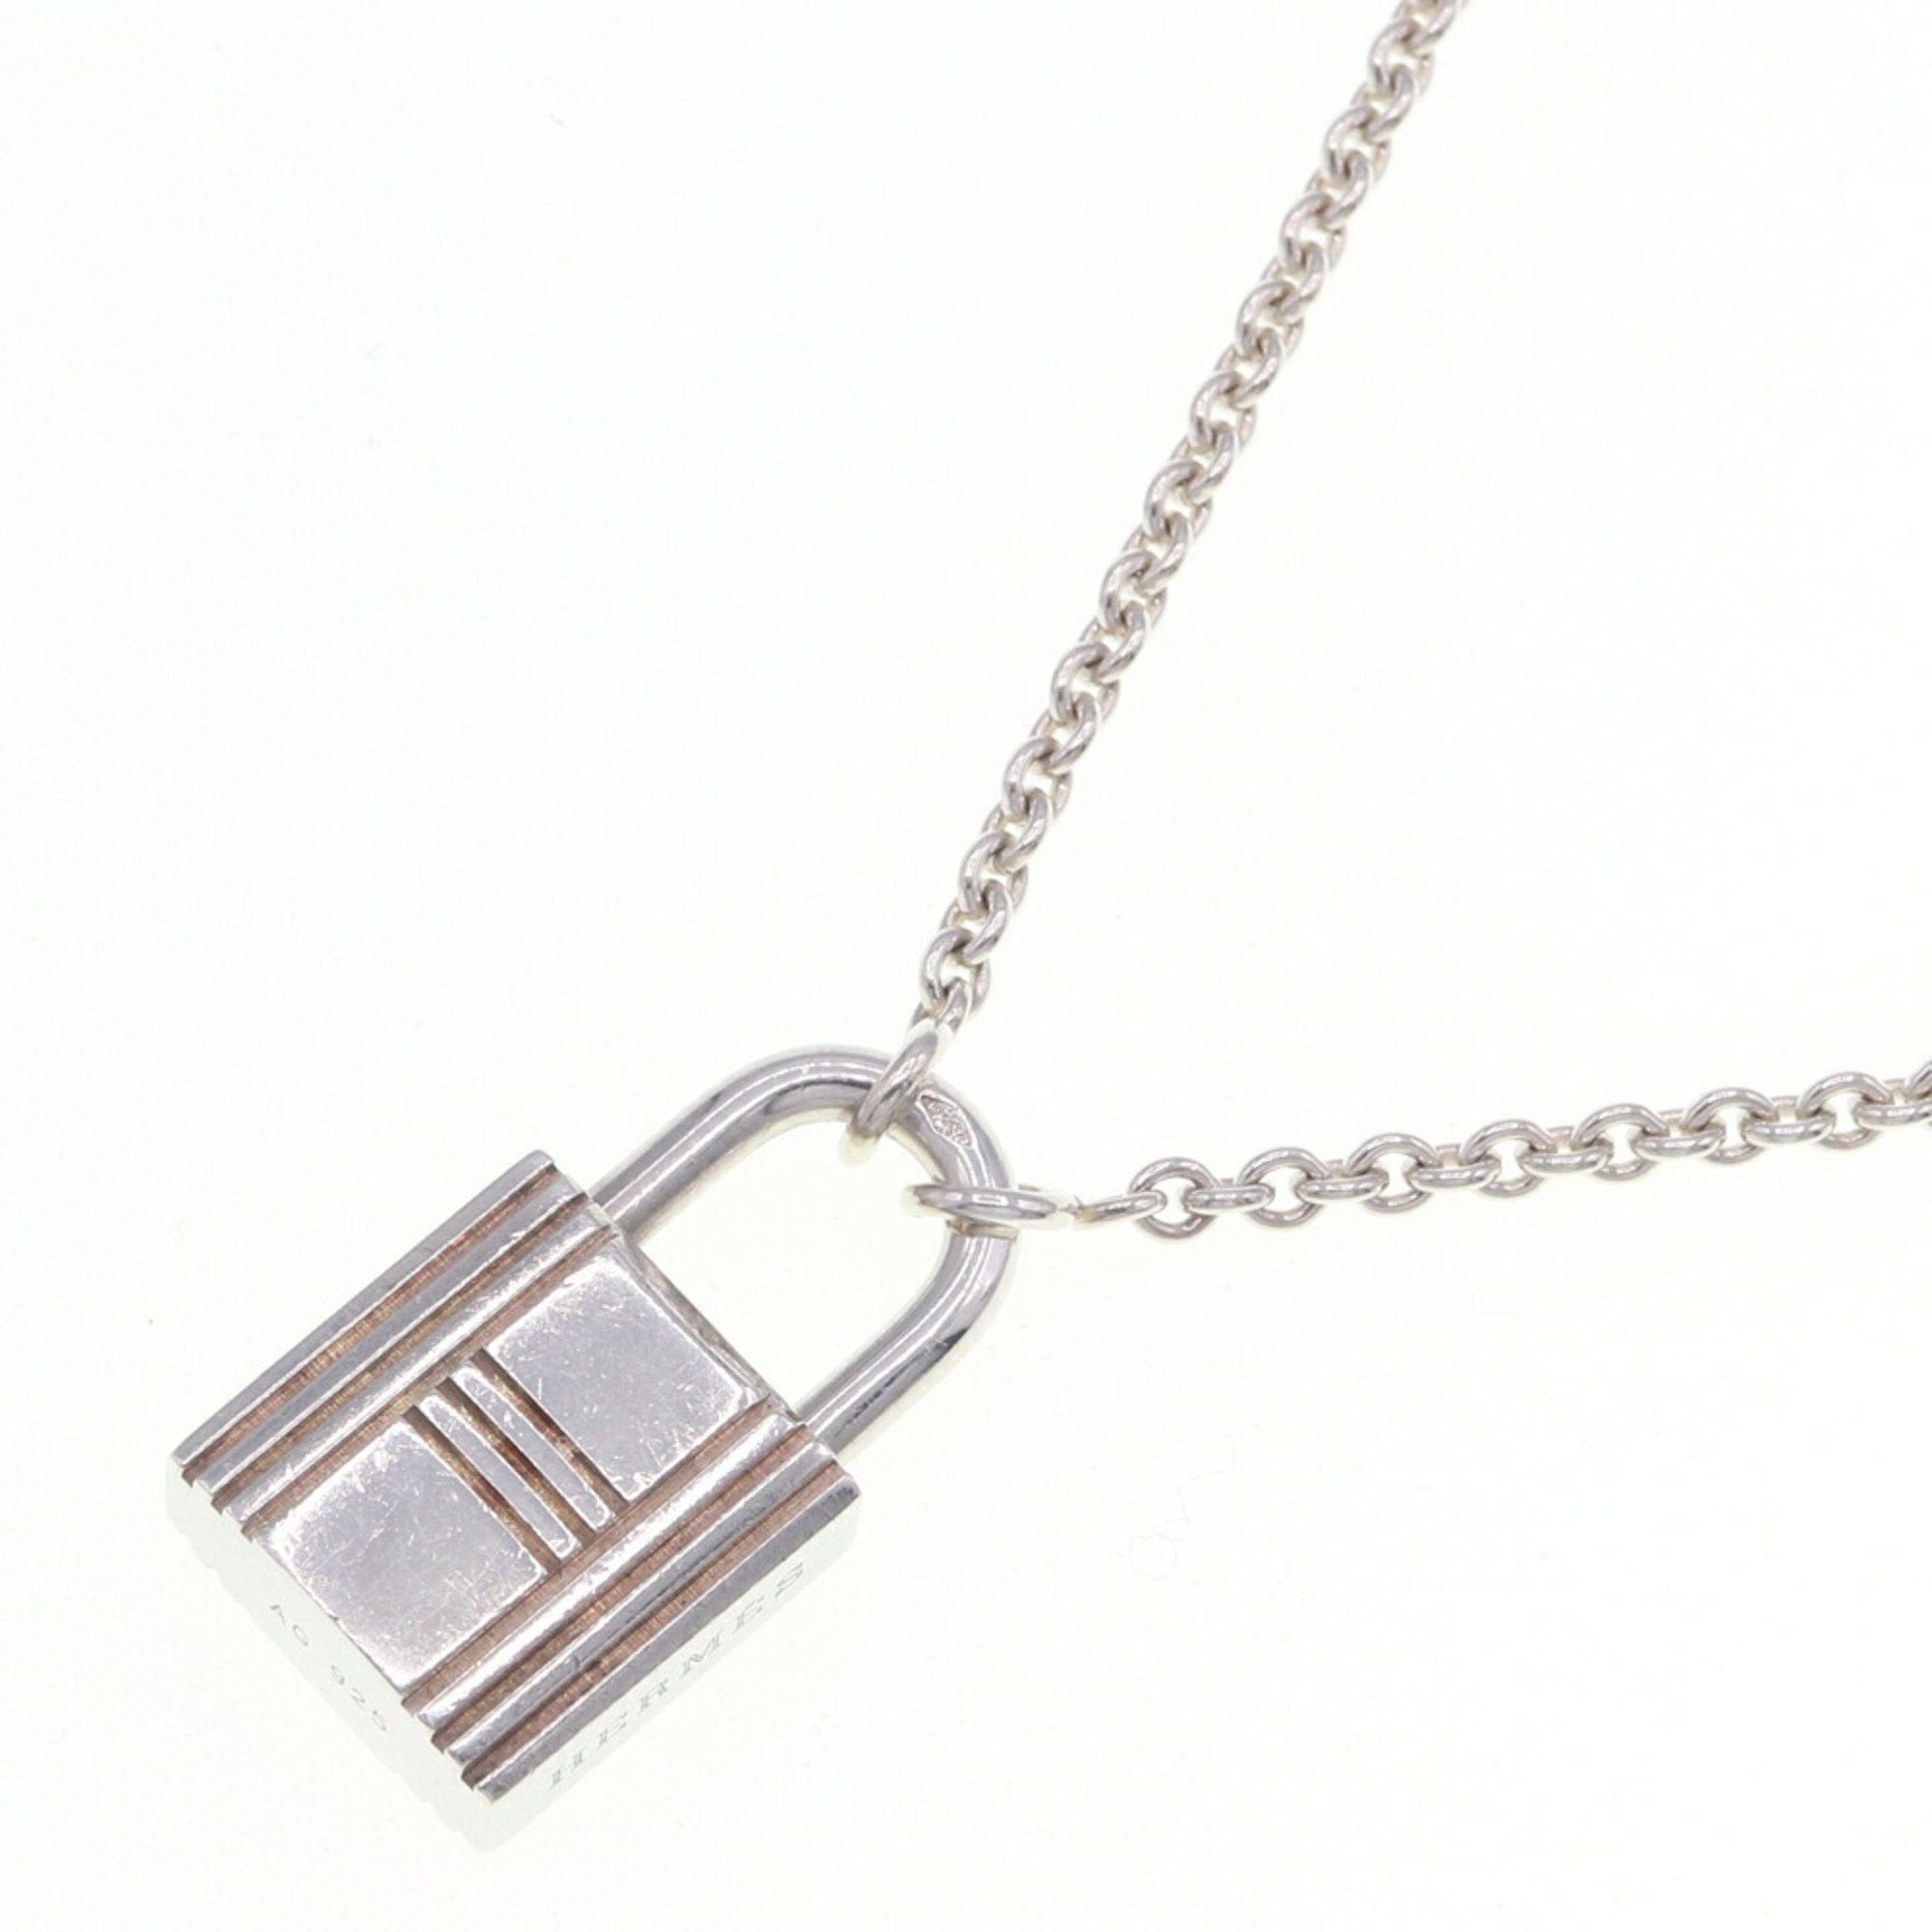 image of Hermes Necklace Cadena Motif Sv Sterling Silver 925 Pendant Choker Kadena Padlock, Women's